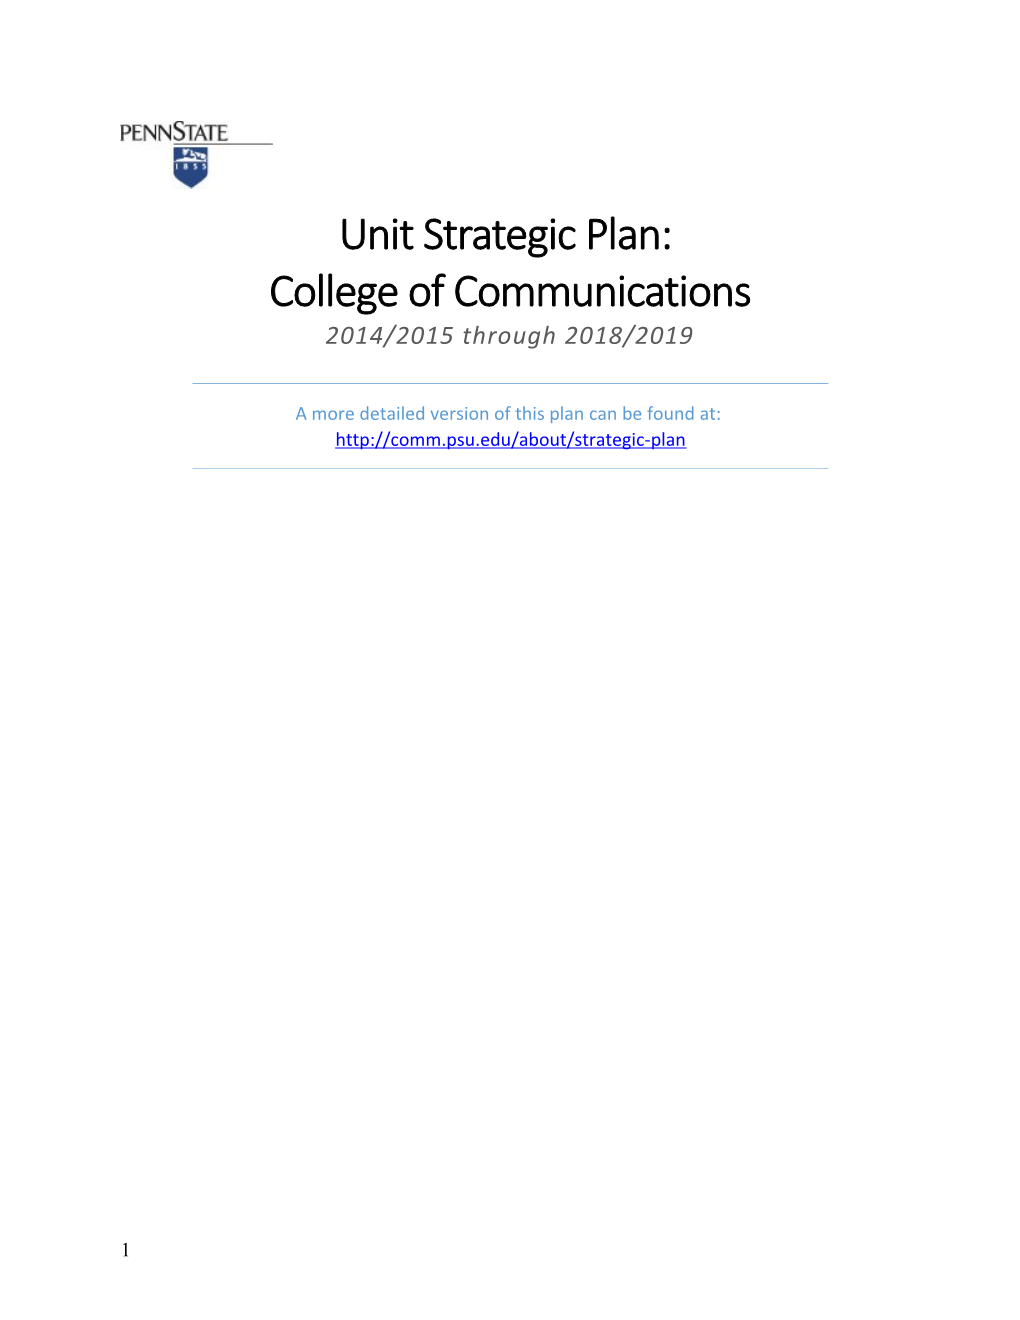 Penn State College of Communications Strategic Plan